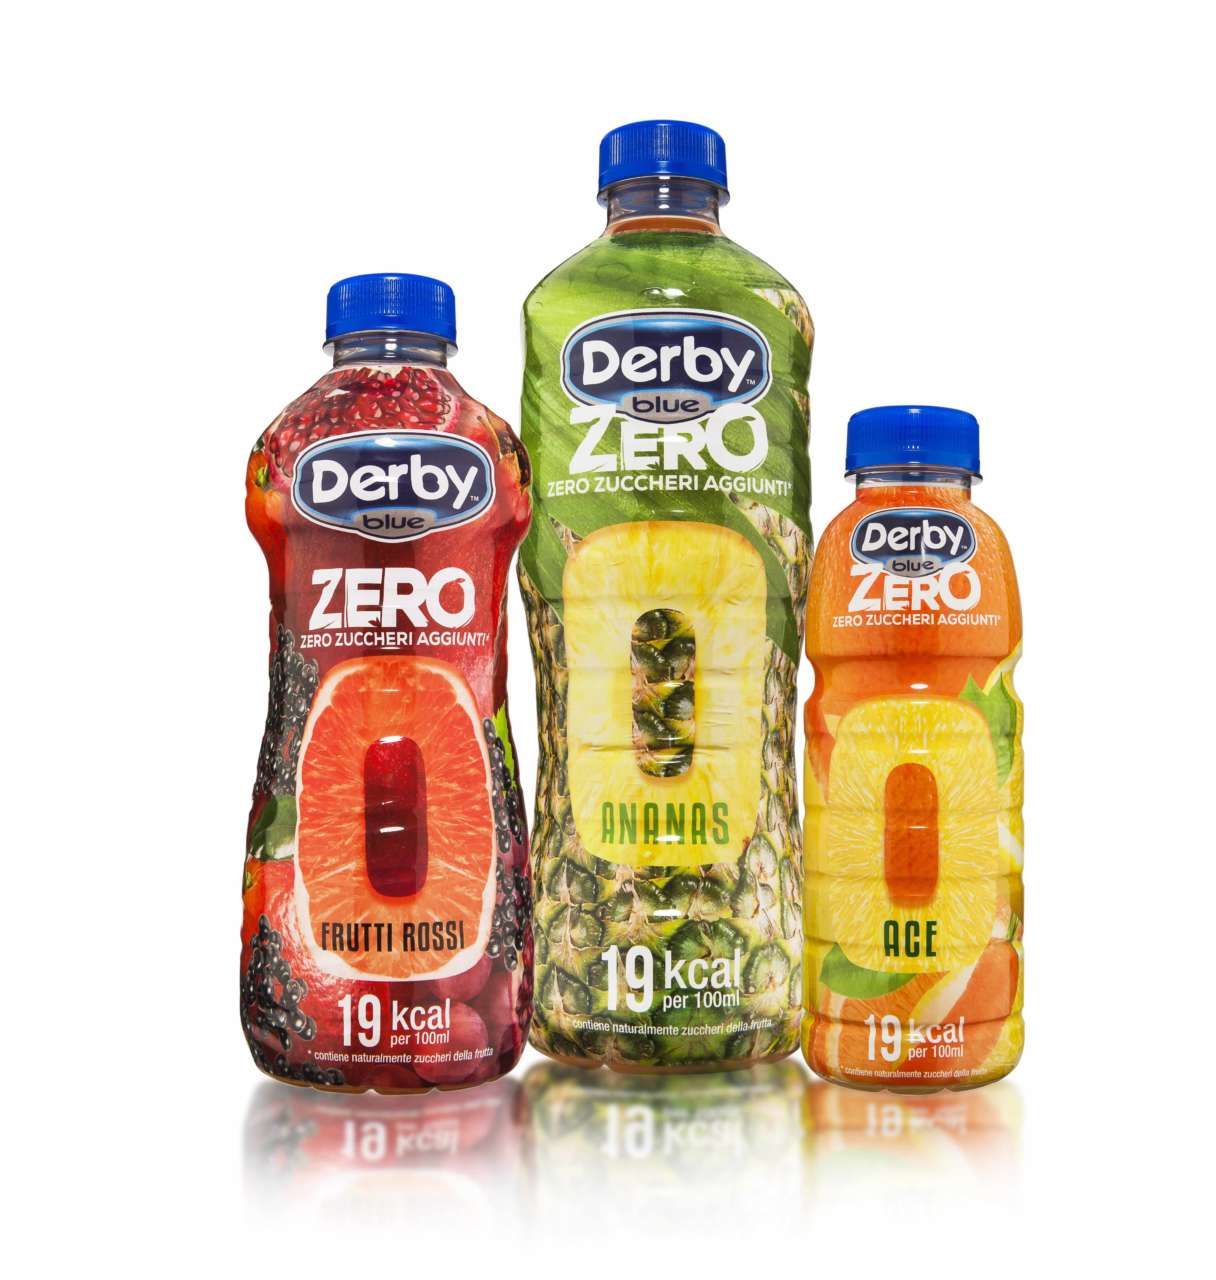 Derby Blue Zero Zuccheri aggiunti: il gusto in 19kcal